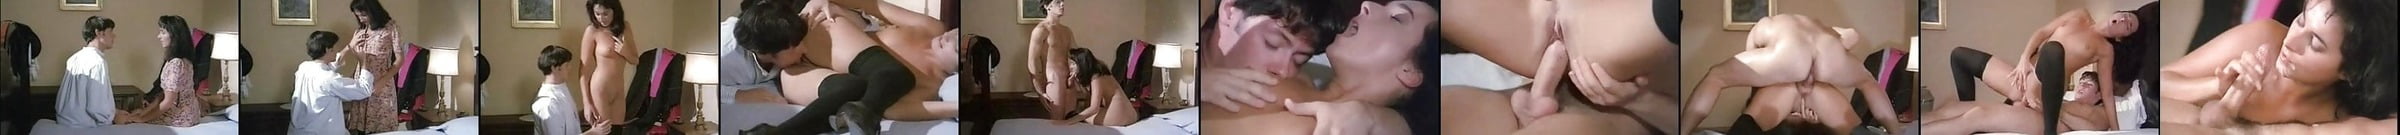 Kathy Kash Free Porn Star Videos XHamster